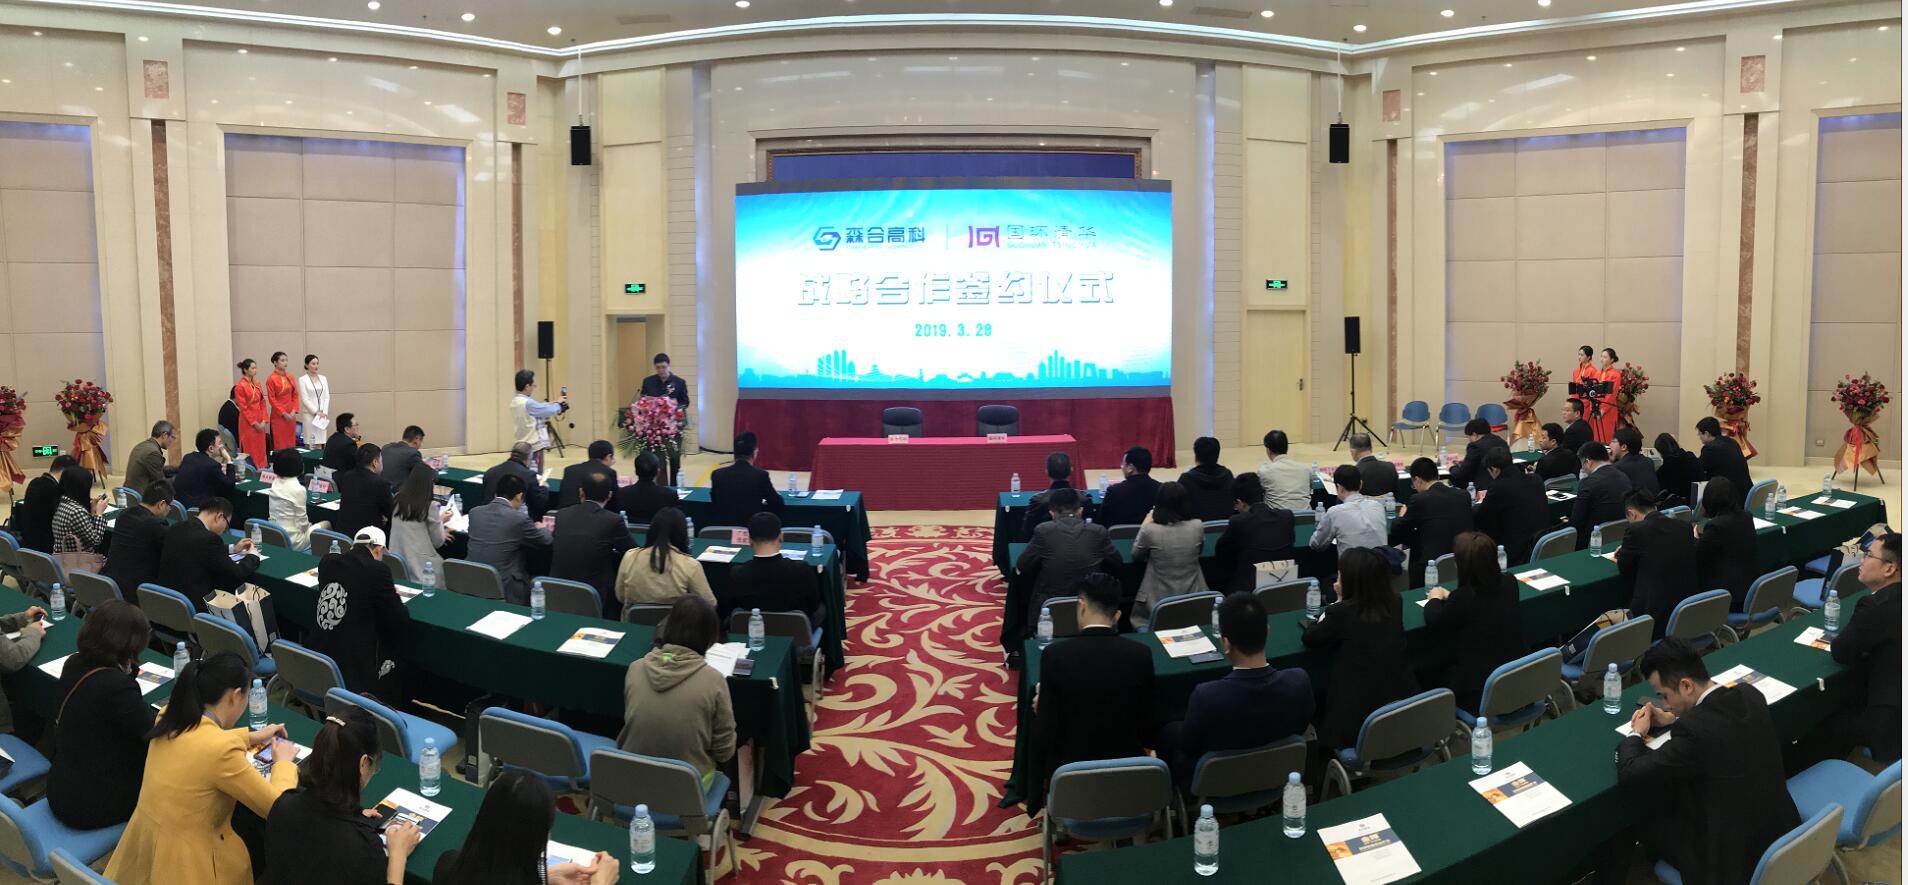 Senhe High-Tech and Guohuan Tsinghua Sign Major Strategic Agreement and Jointly 